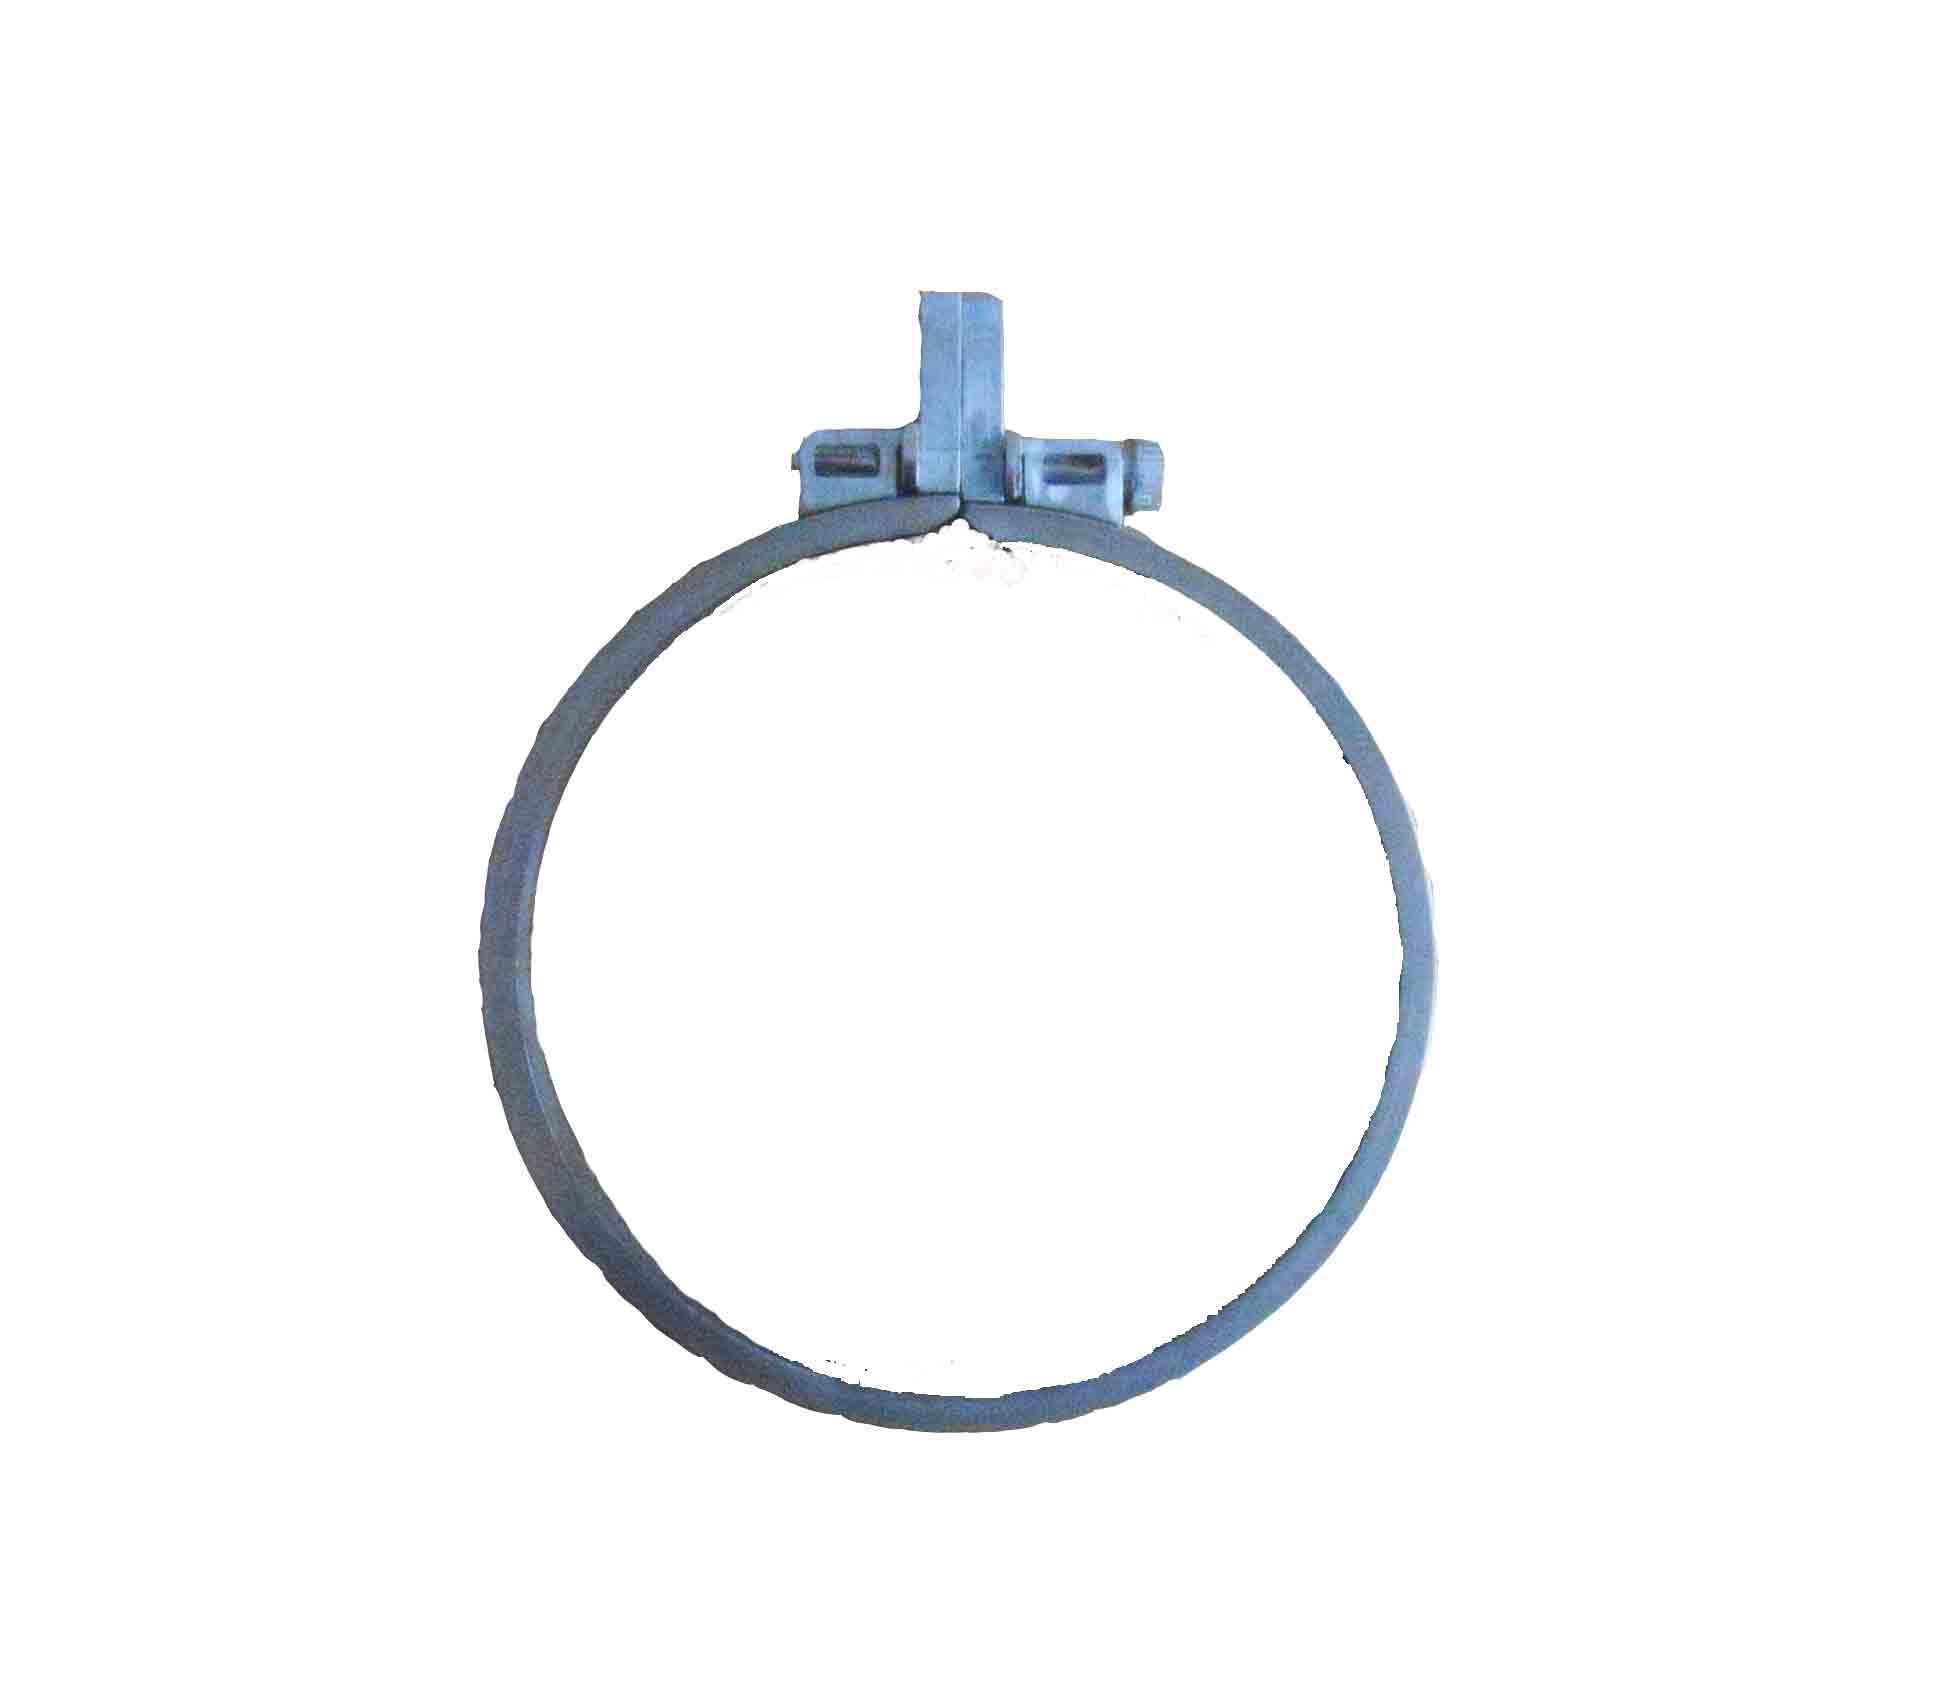 Stainless Stell Sealing Ring for Meter Base  watt meter